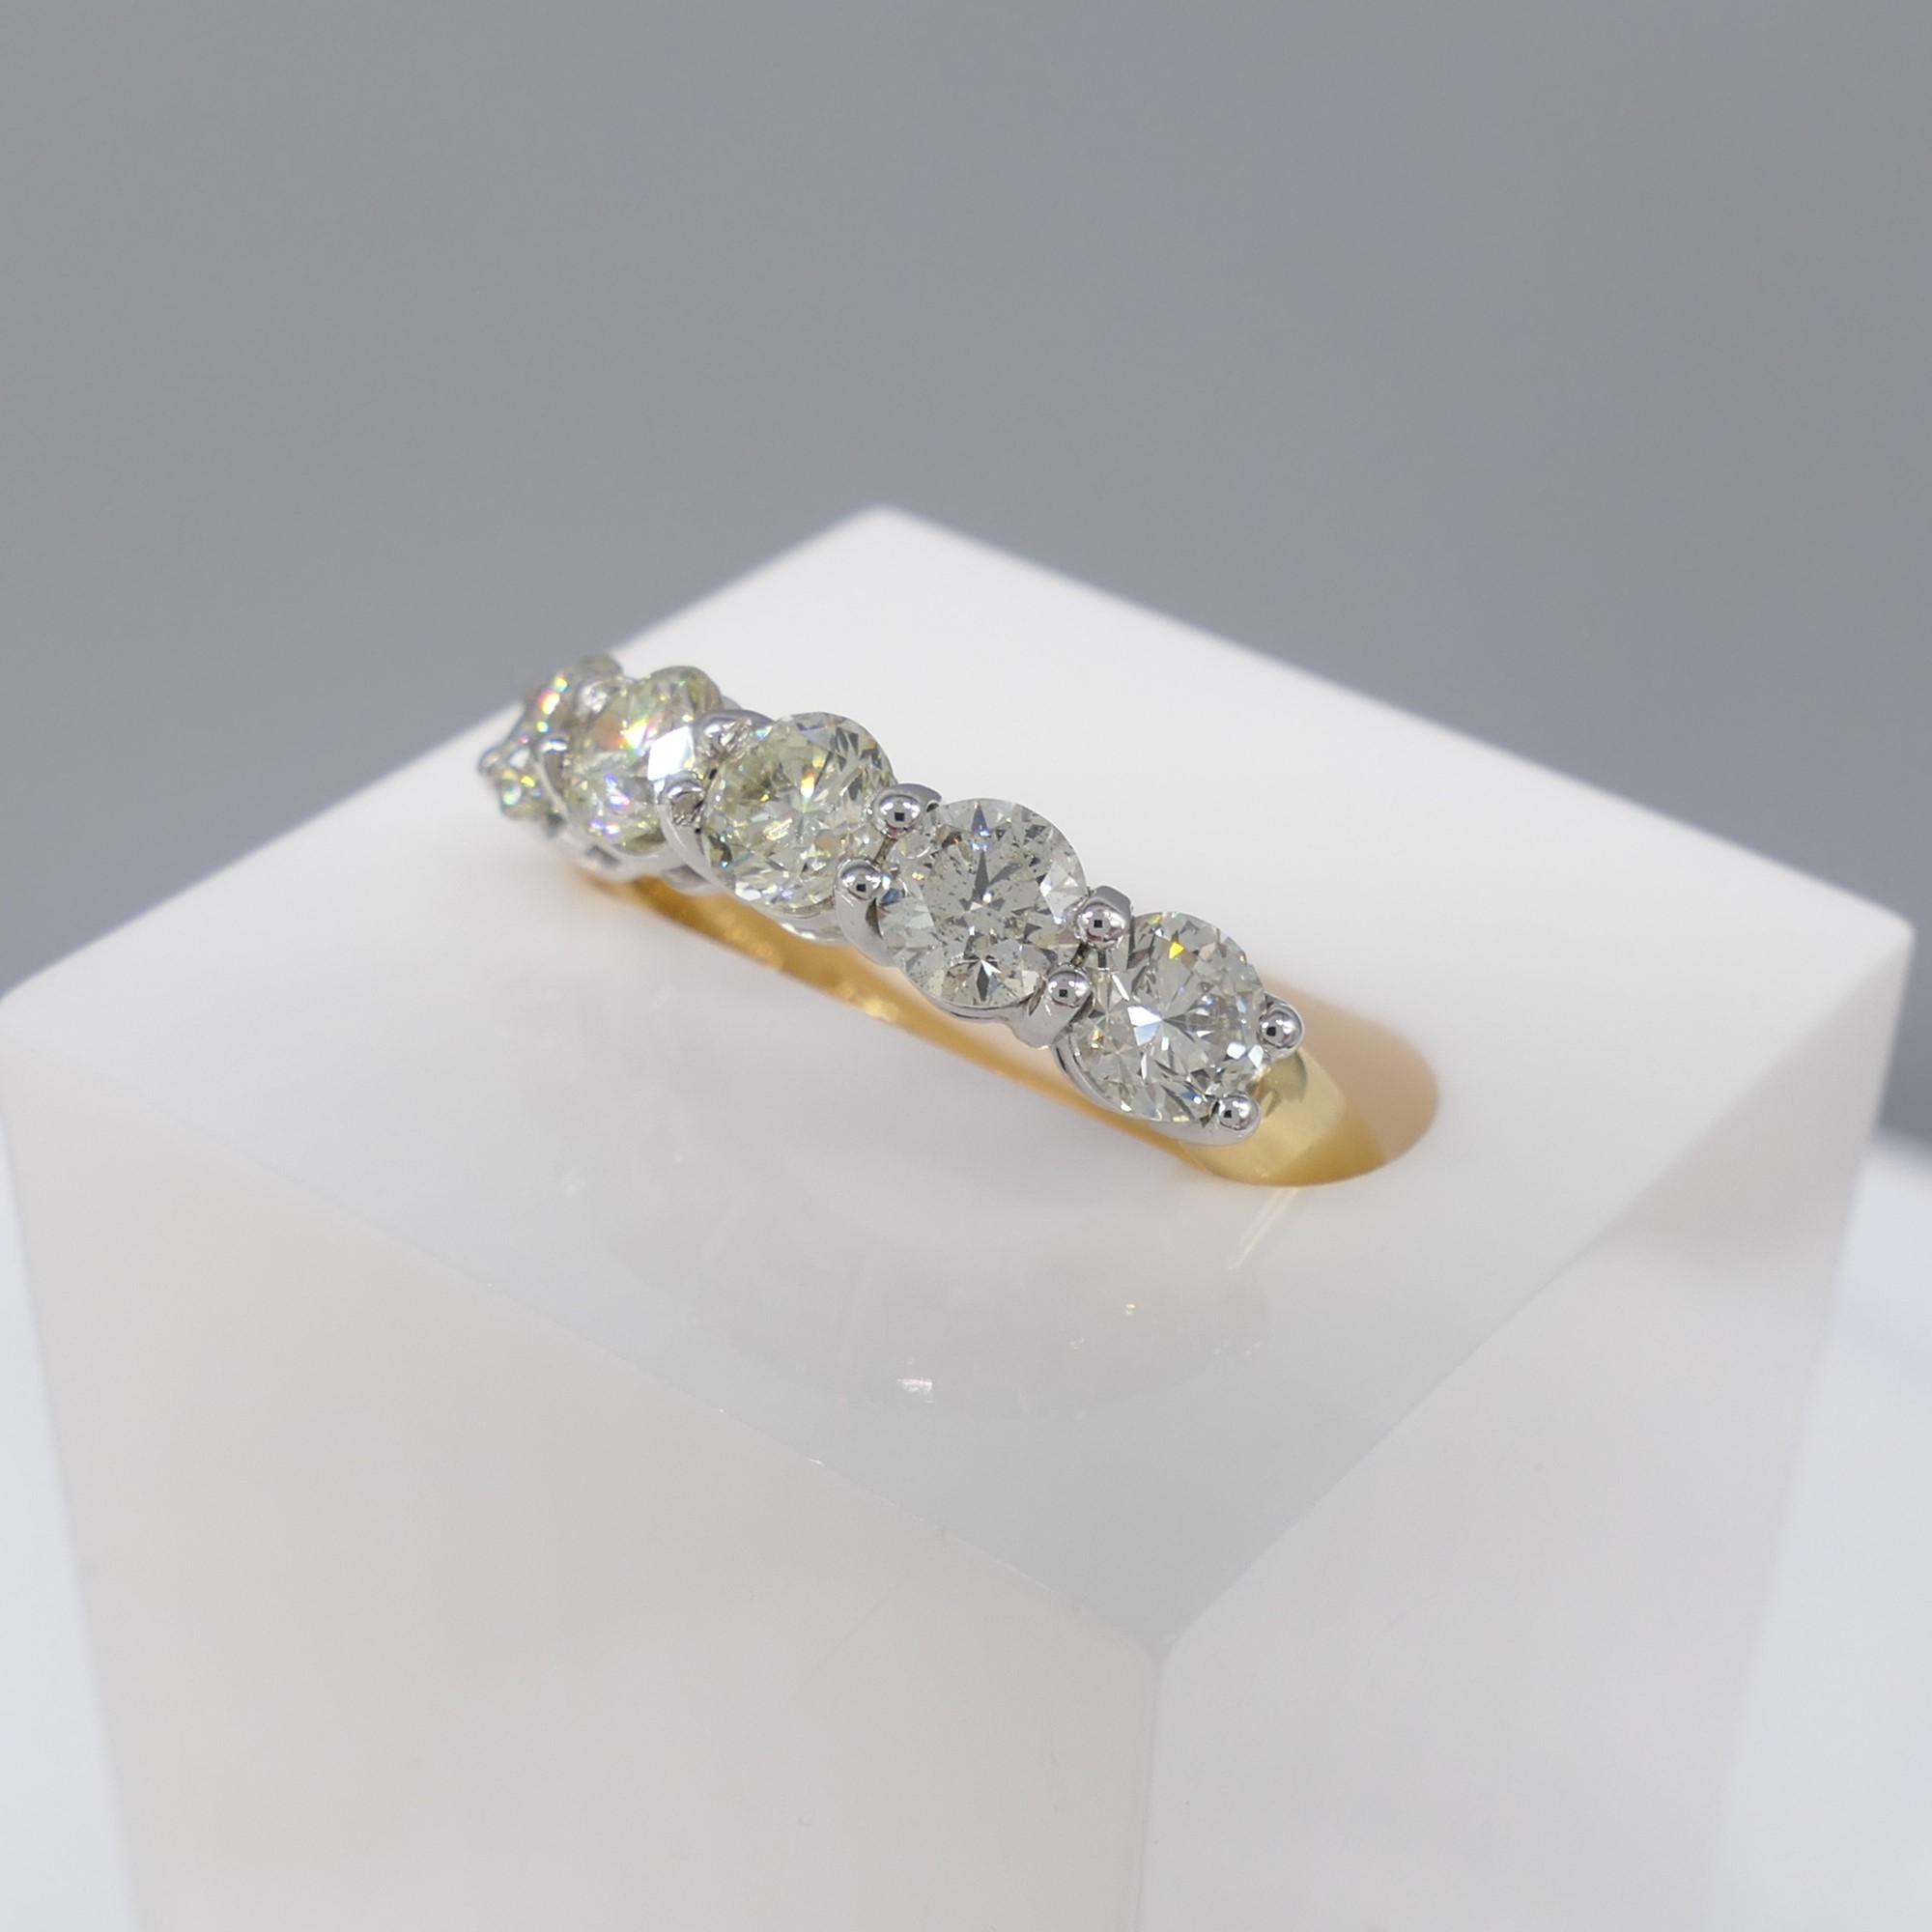 18K Yellow and White Gold 1.53 Carat 5 Stone Diamond Ring - Image 3 of 7